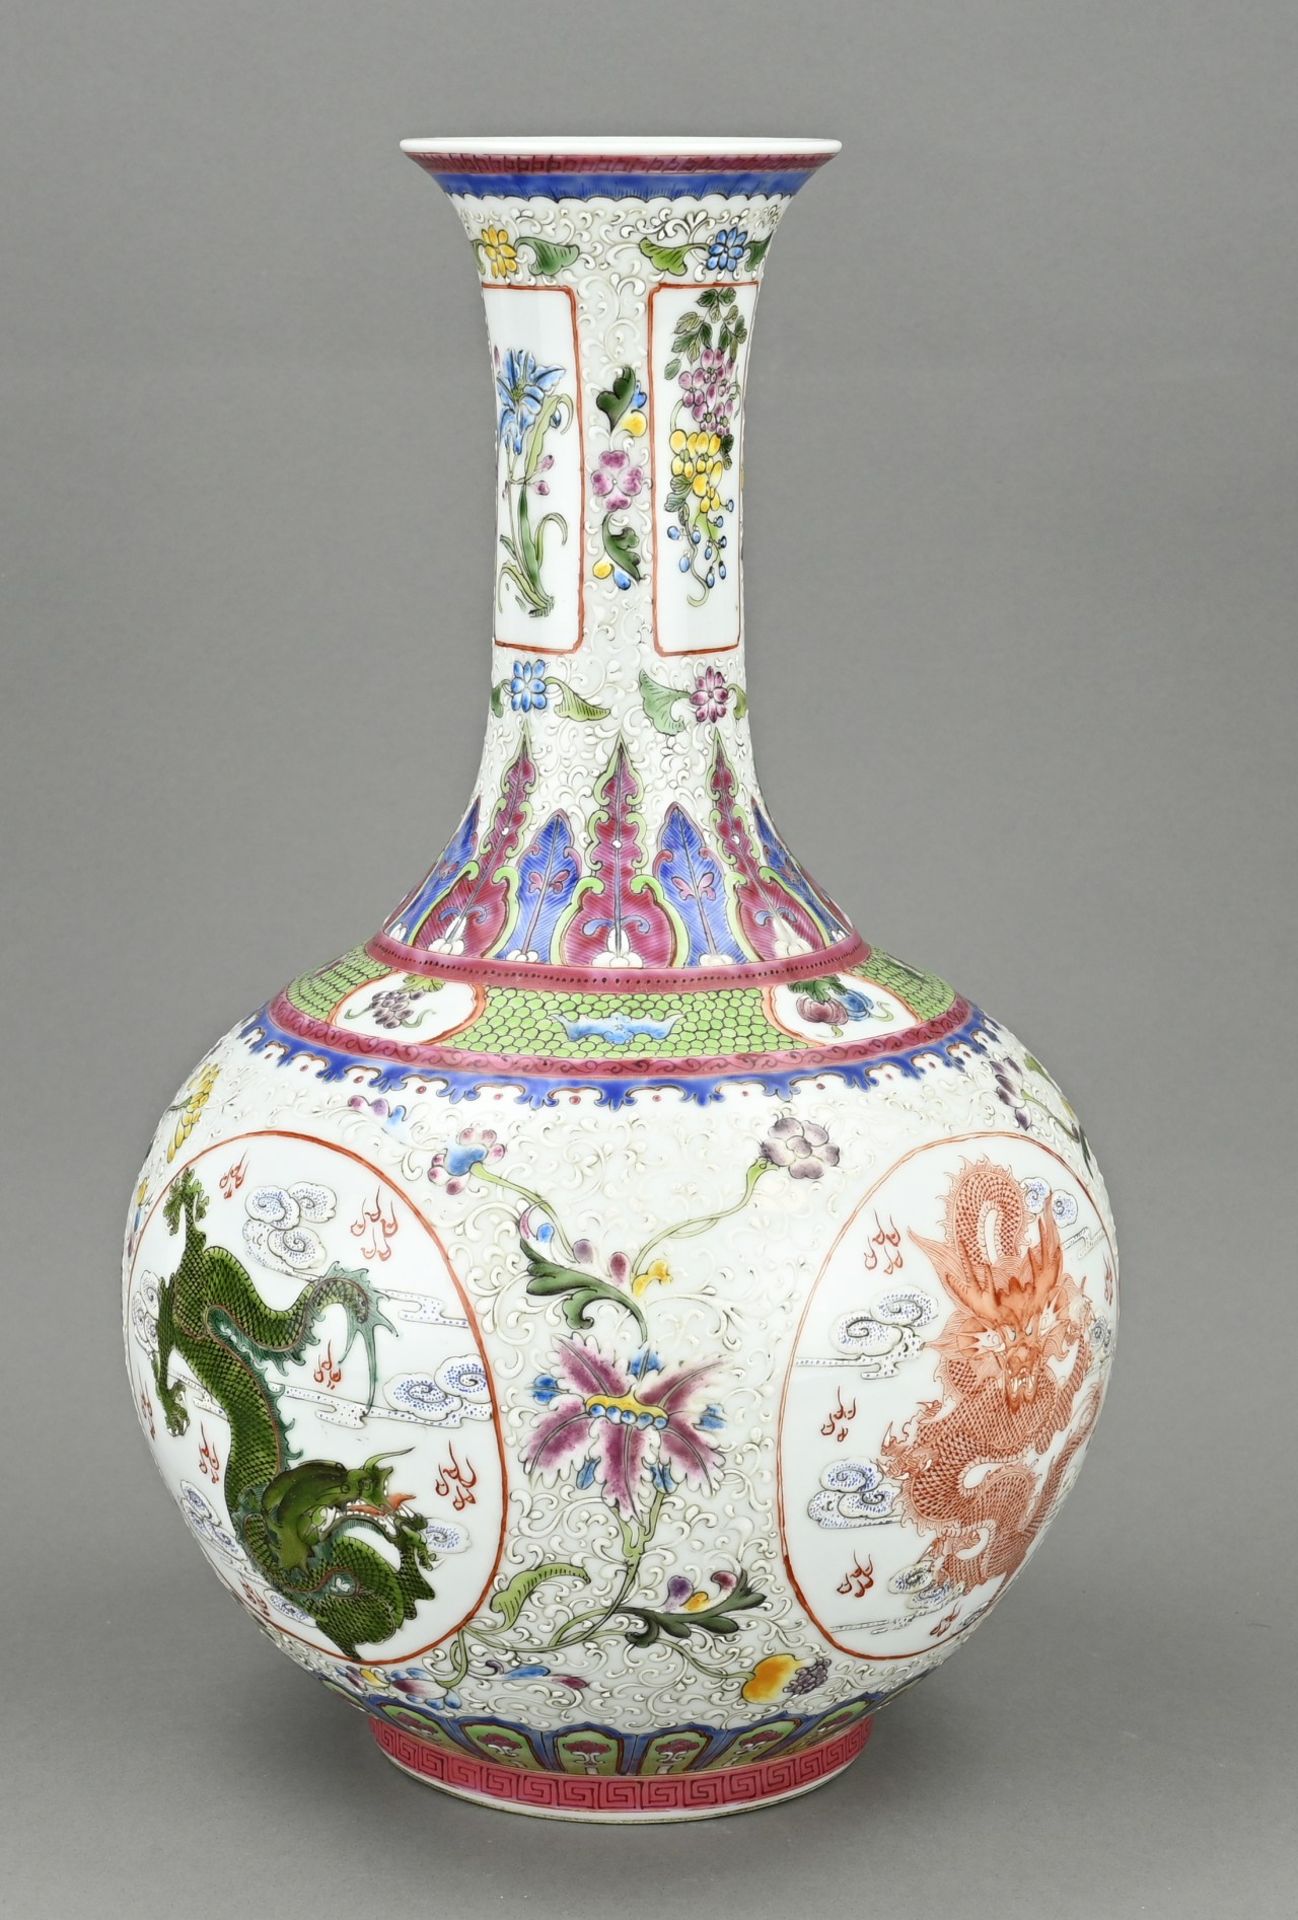 Chinese vase, H 40.8 cm. - Image 2 of 3